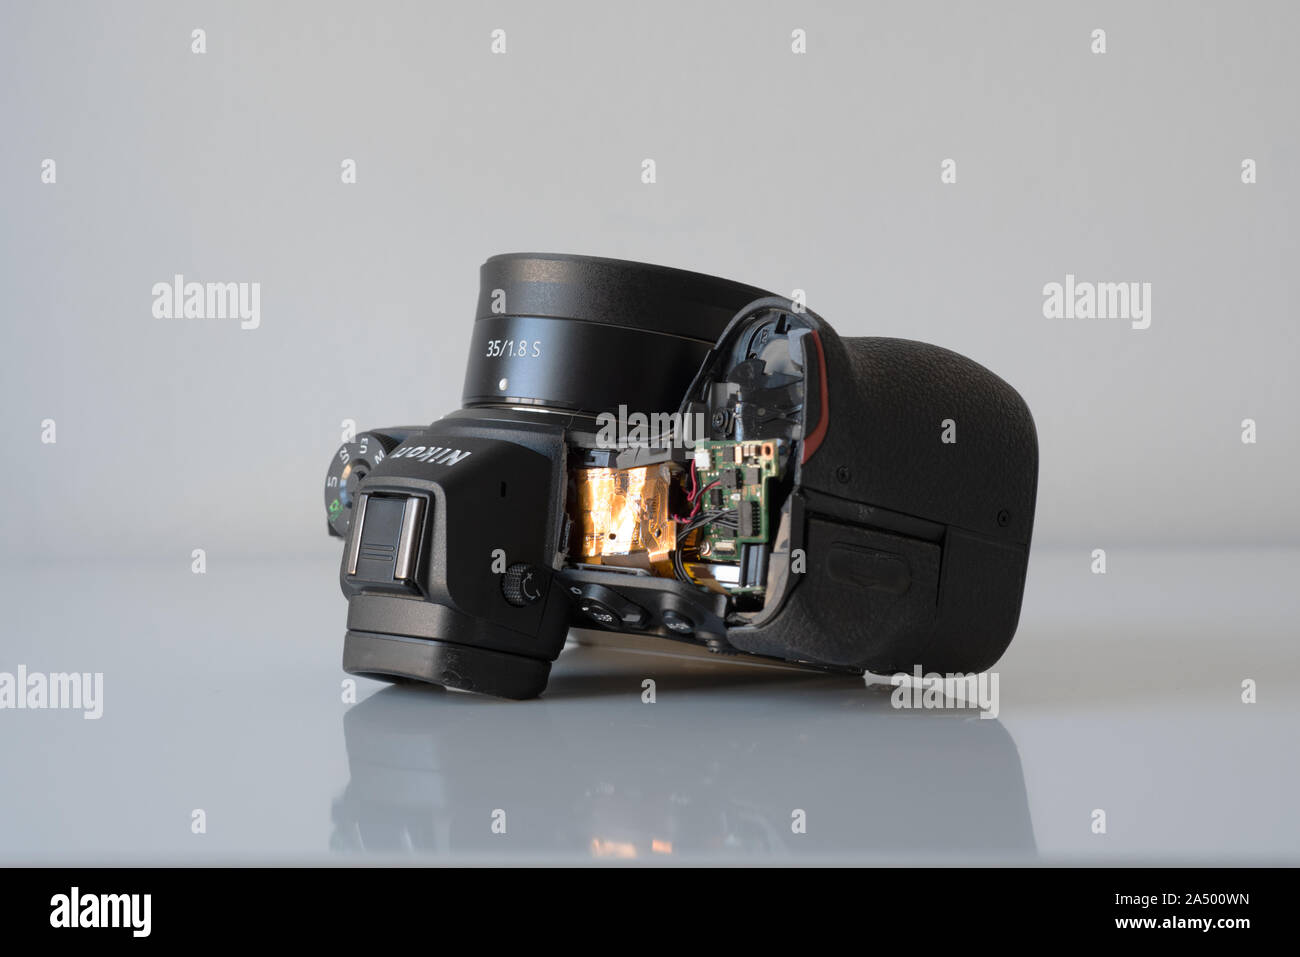 London, United Kingdom - October 17, 2019: A broken Nikon Z6 camera, one of the Japanese electronics company's flagship mirrorless cameras. Stock Photo